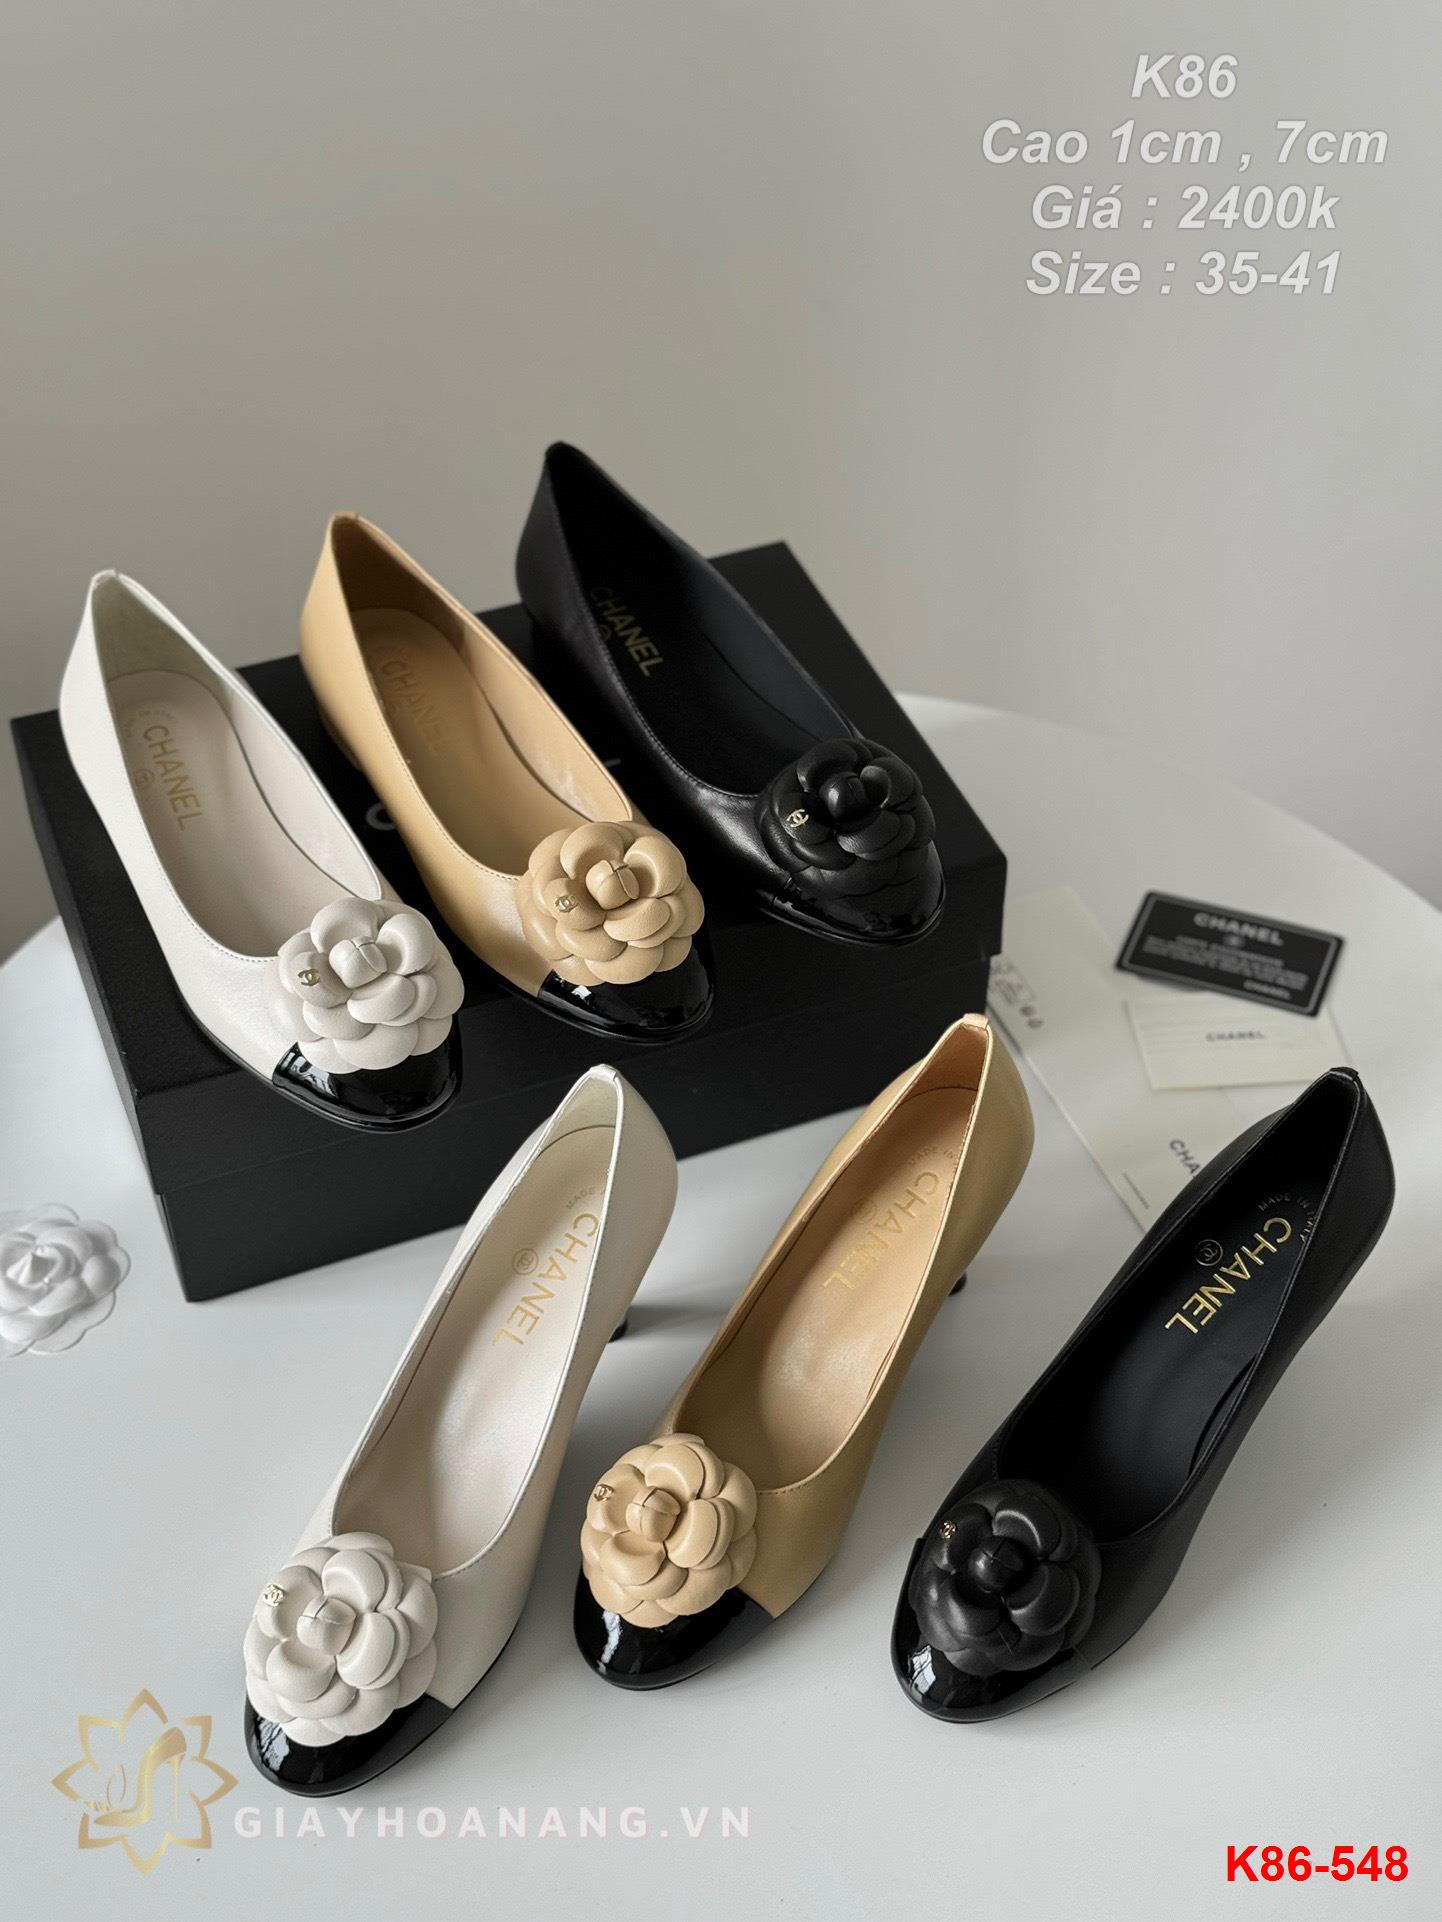 K86-548 Chanel giày cao 1cm , 7cm siêu cấp